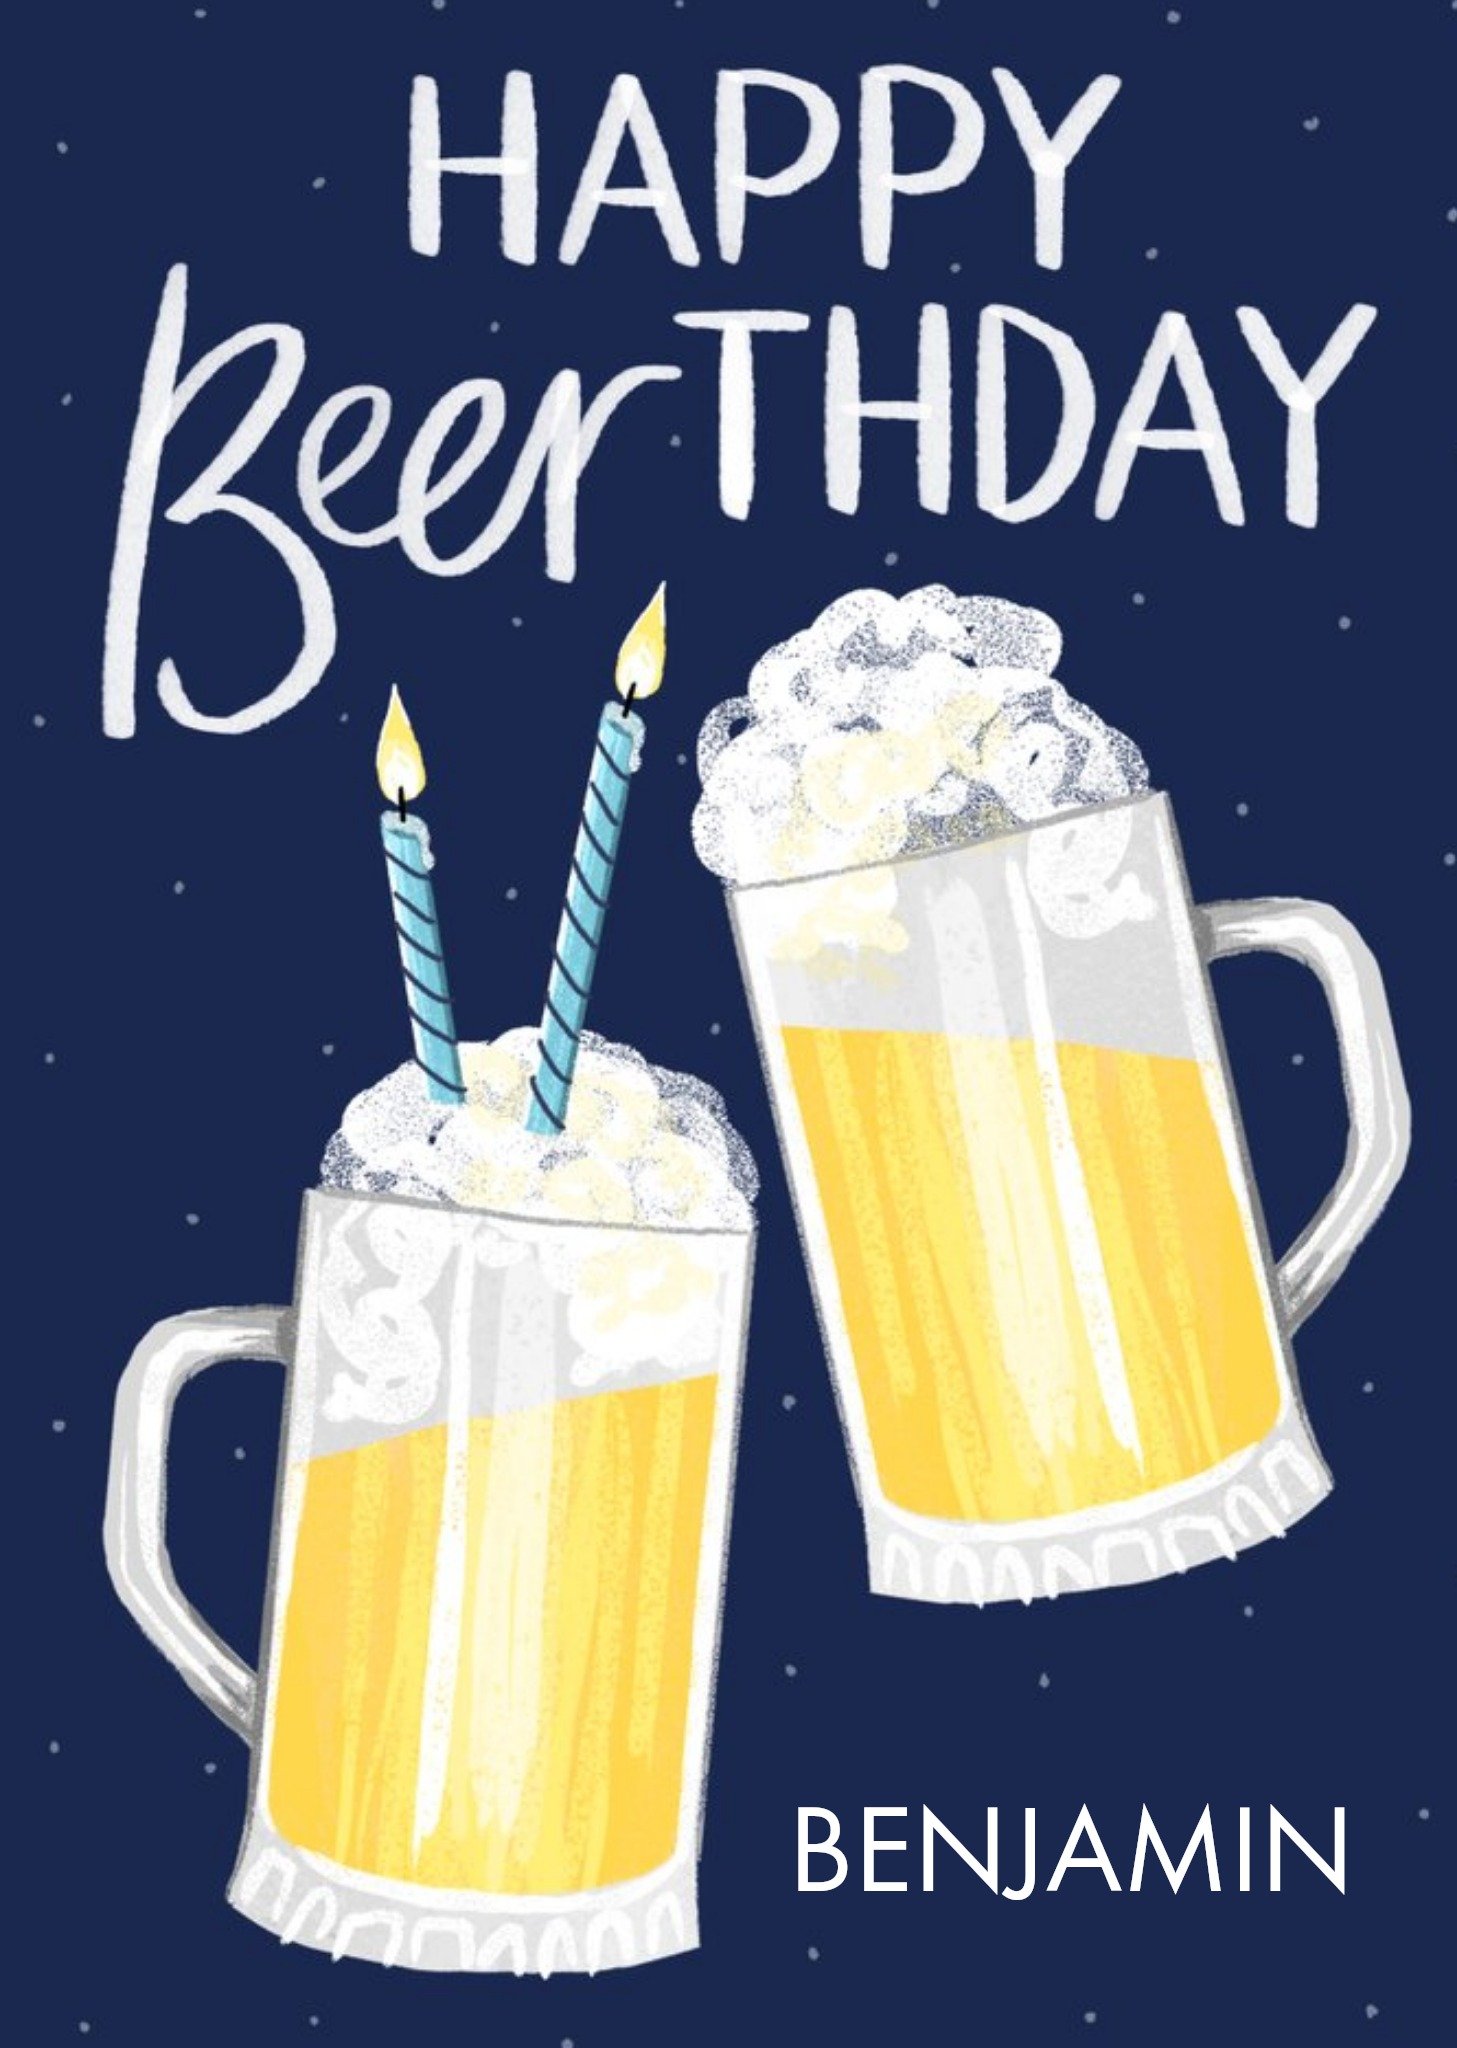 Okey Dokey Design Beer Illustration Beerthday Birthday Card, Large